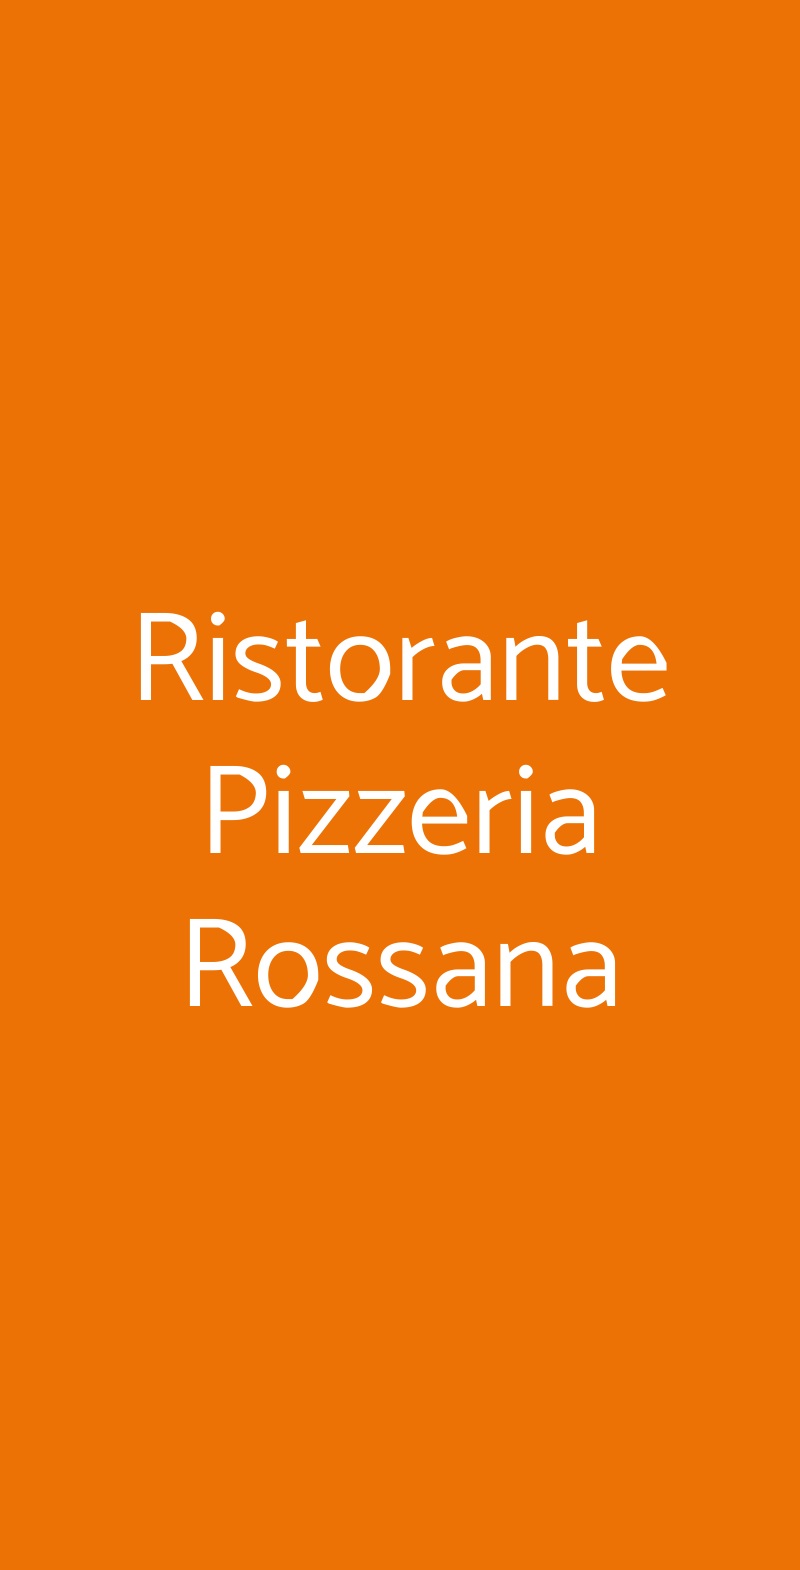 Ristorante Pizzeria Rossana Milano menù 1 pagina